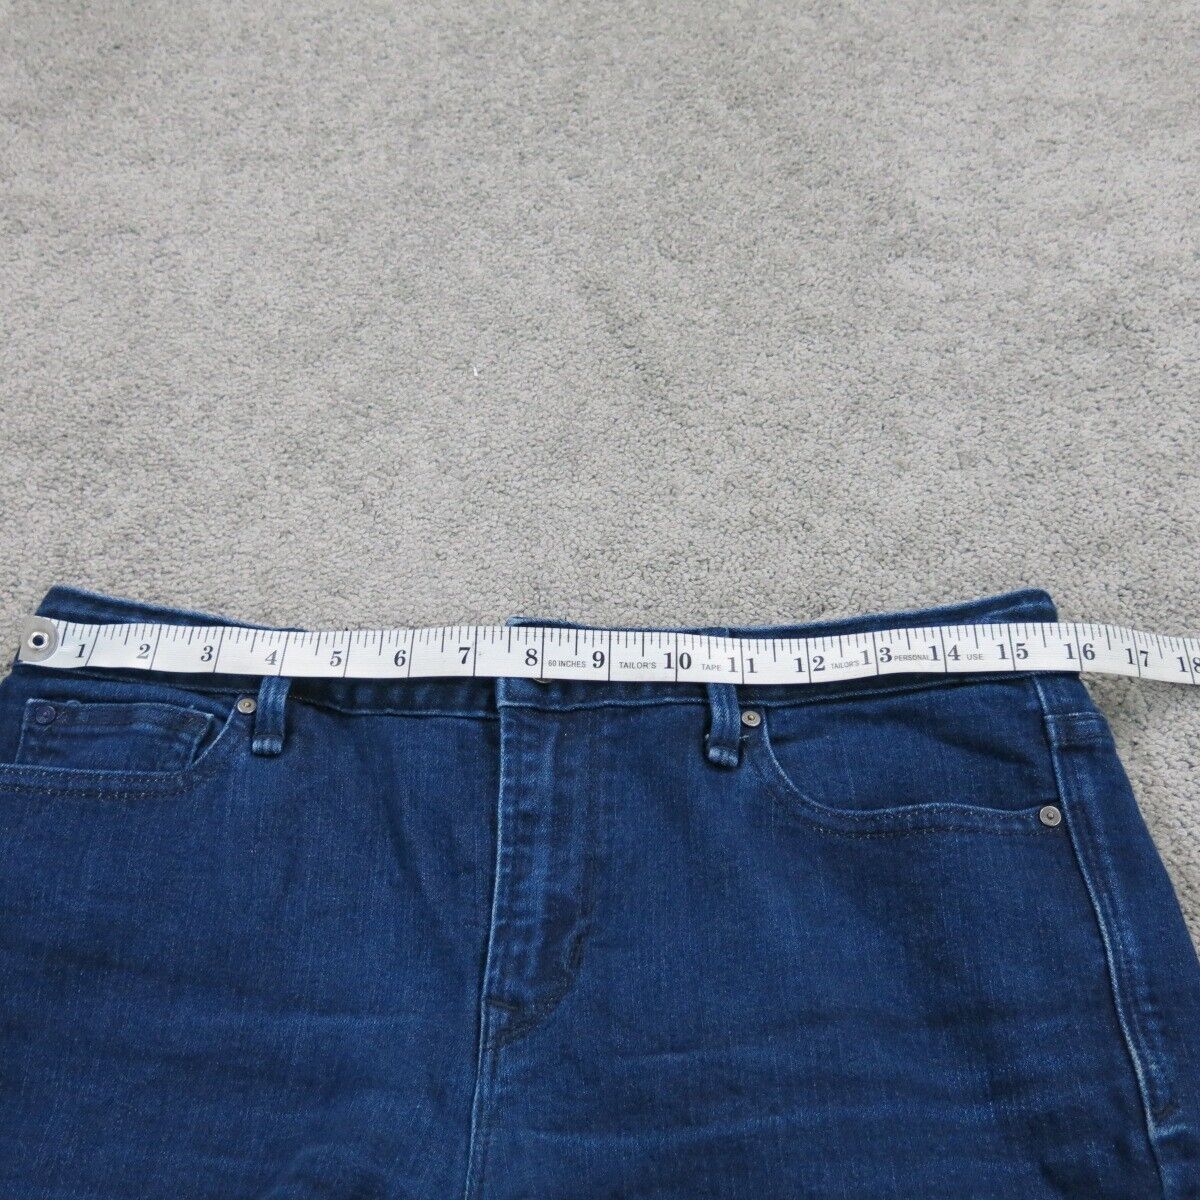 Womens Real Straight Leg Jeans Denim Stretch Mid Rise 5 Pocket Blue Size 29